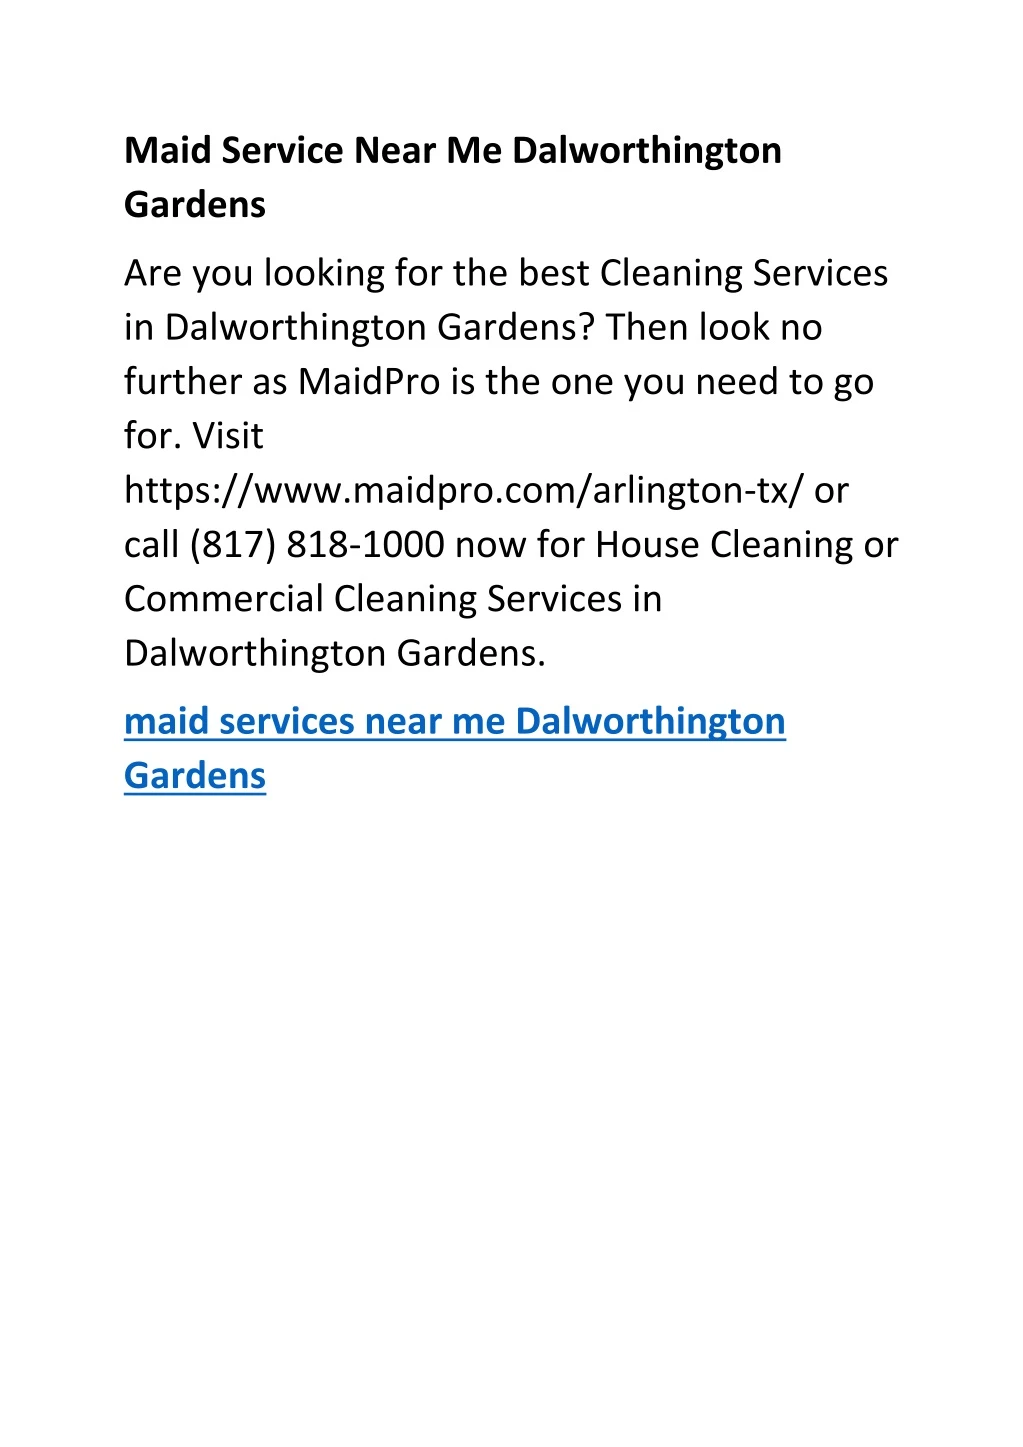 maid service near me dalworthington gardens